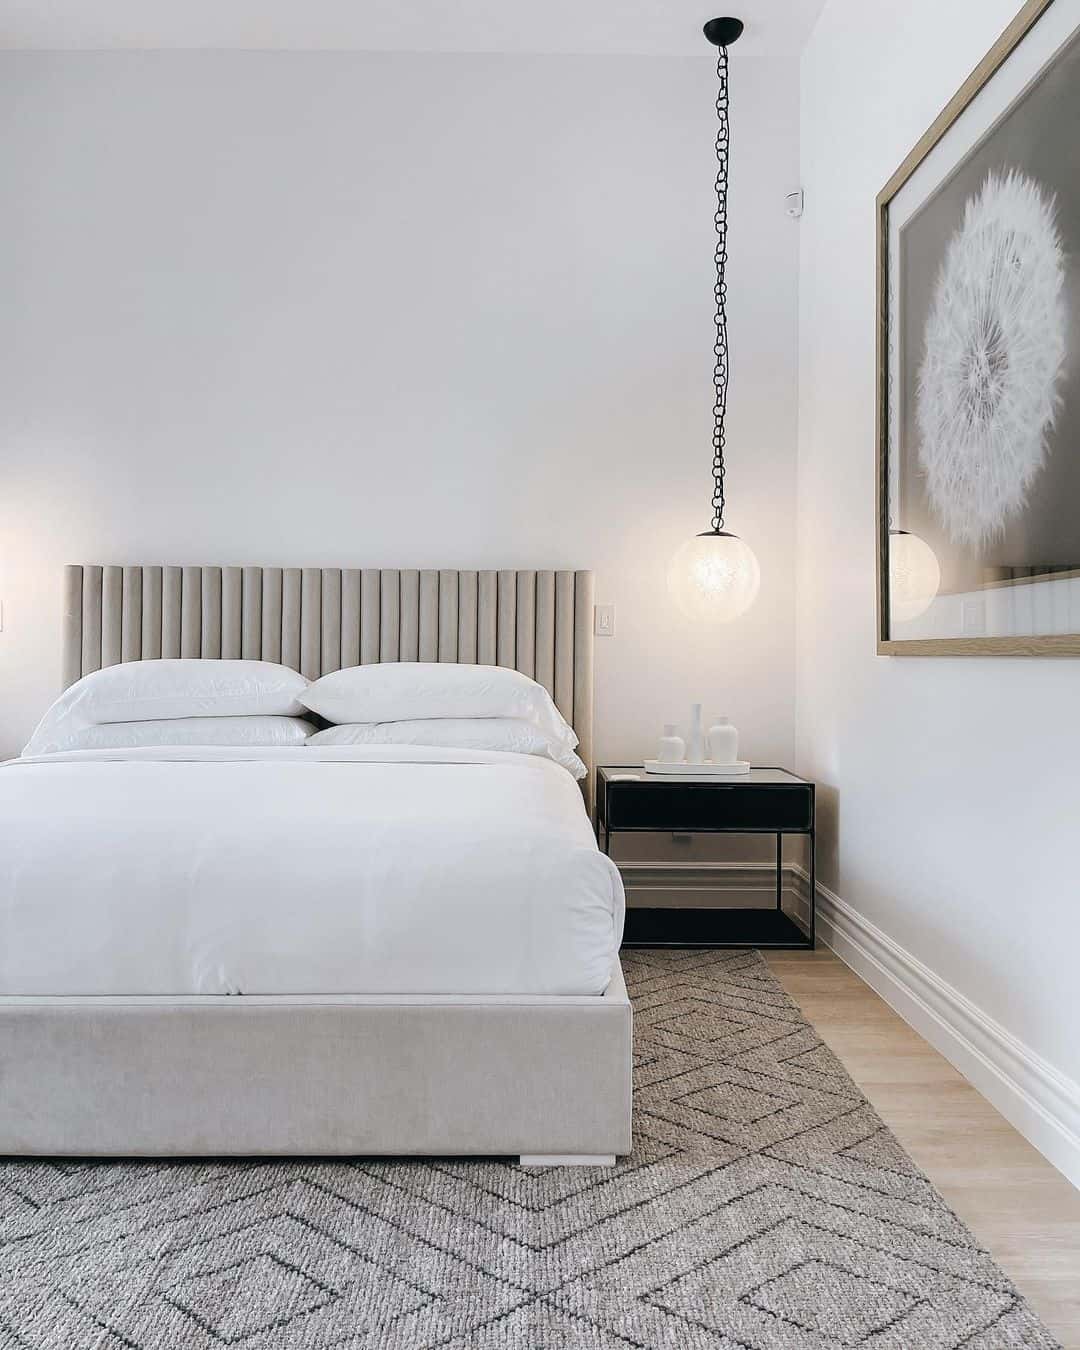 Pristine White and Gray Large Master Bedroom - Soul & Lane